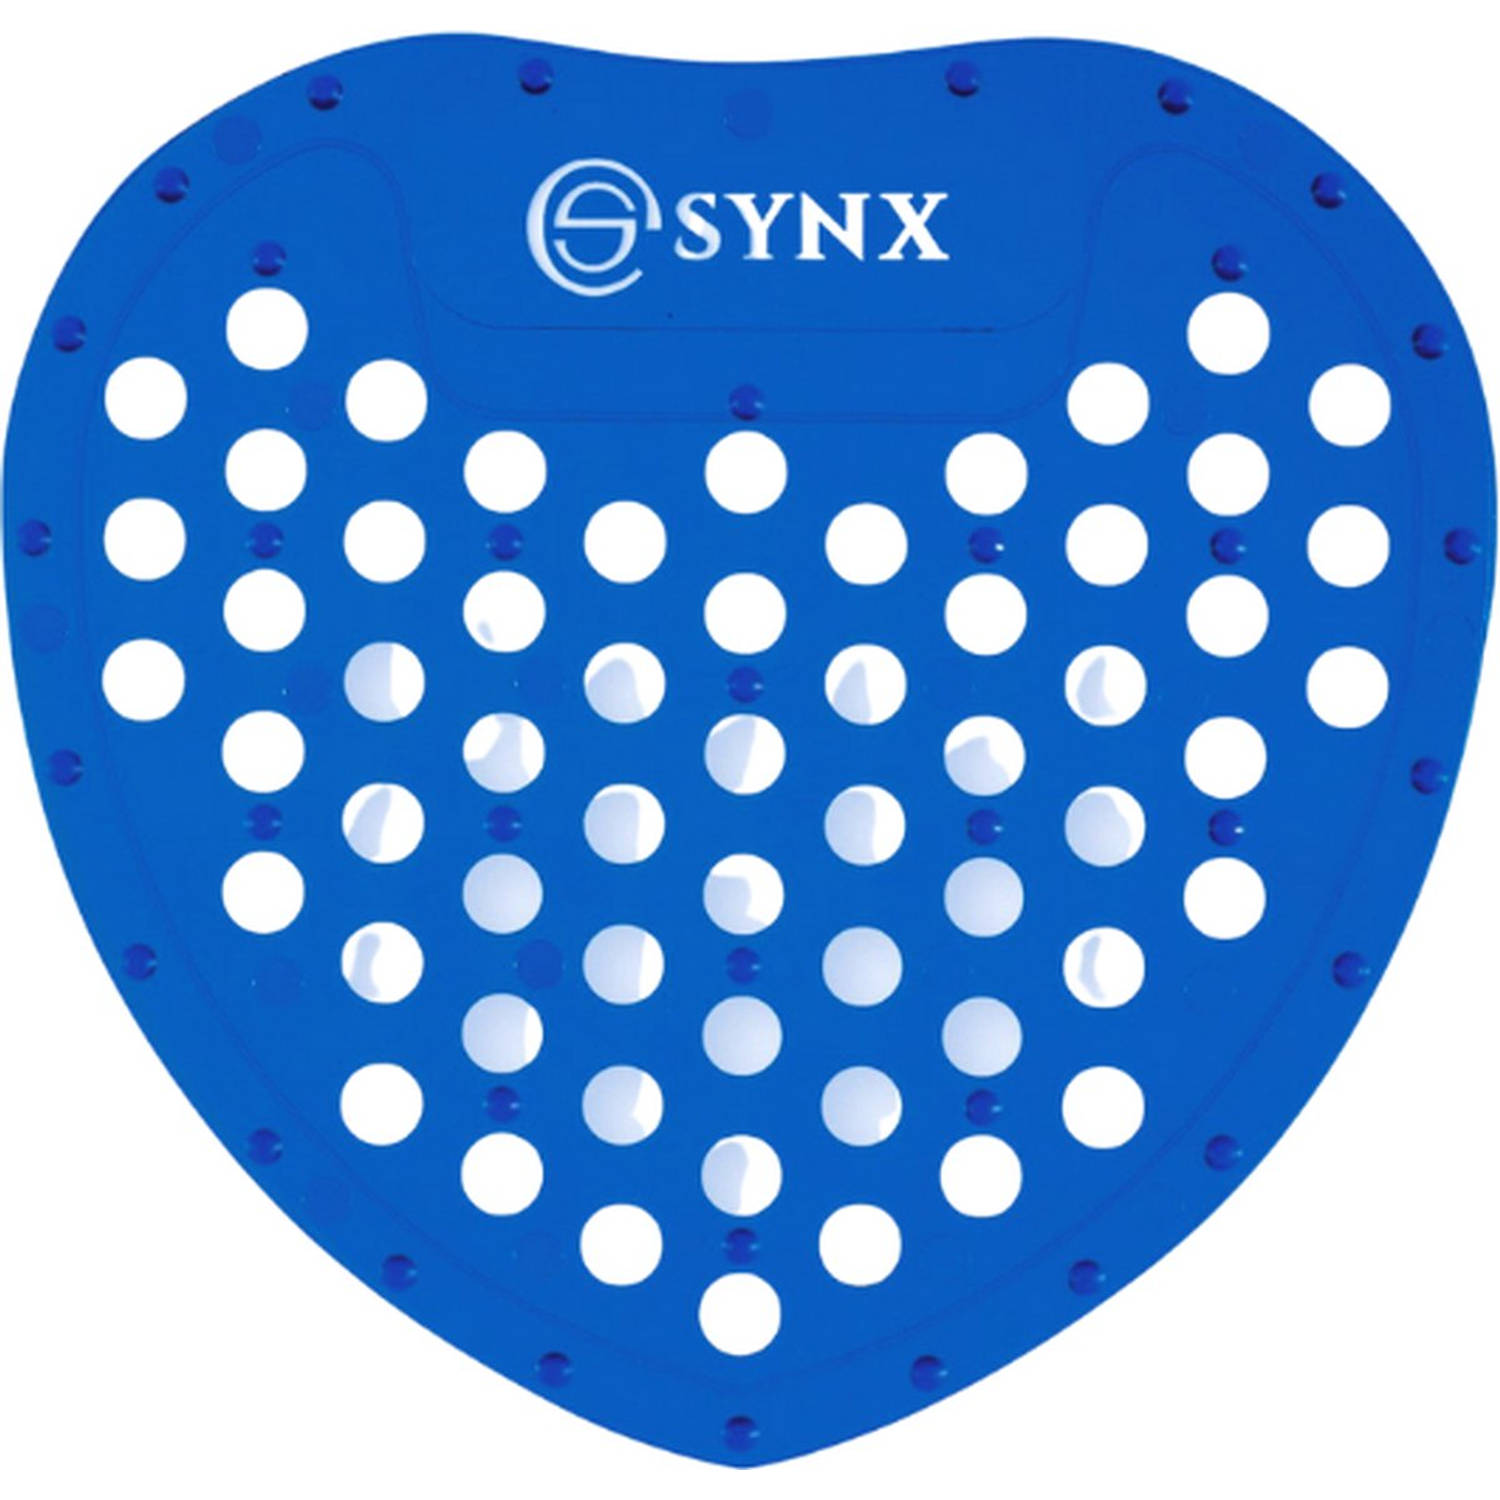 Synx Tools Urinoir Matje 1 stuks met Geur - Anti spat mat WC - Toilet Mat - Blauw - Frisse Geur - Anti Splash Mat - Wc Rooster - Urinoirrooster